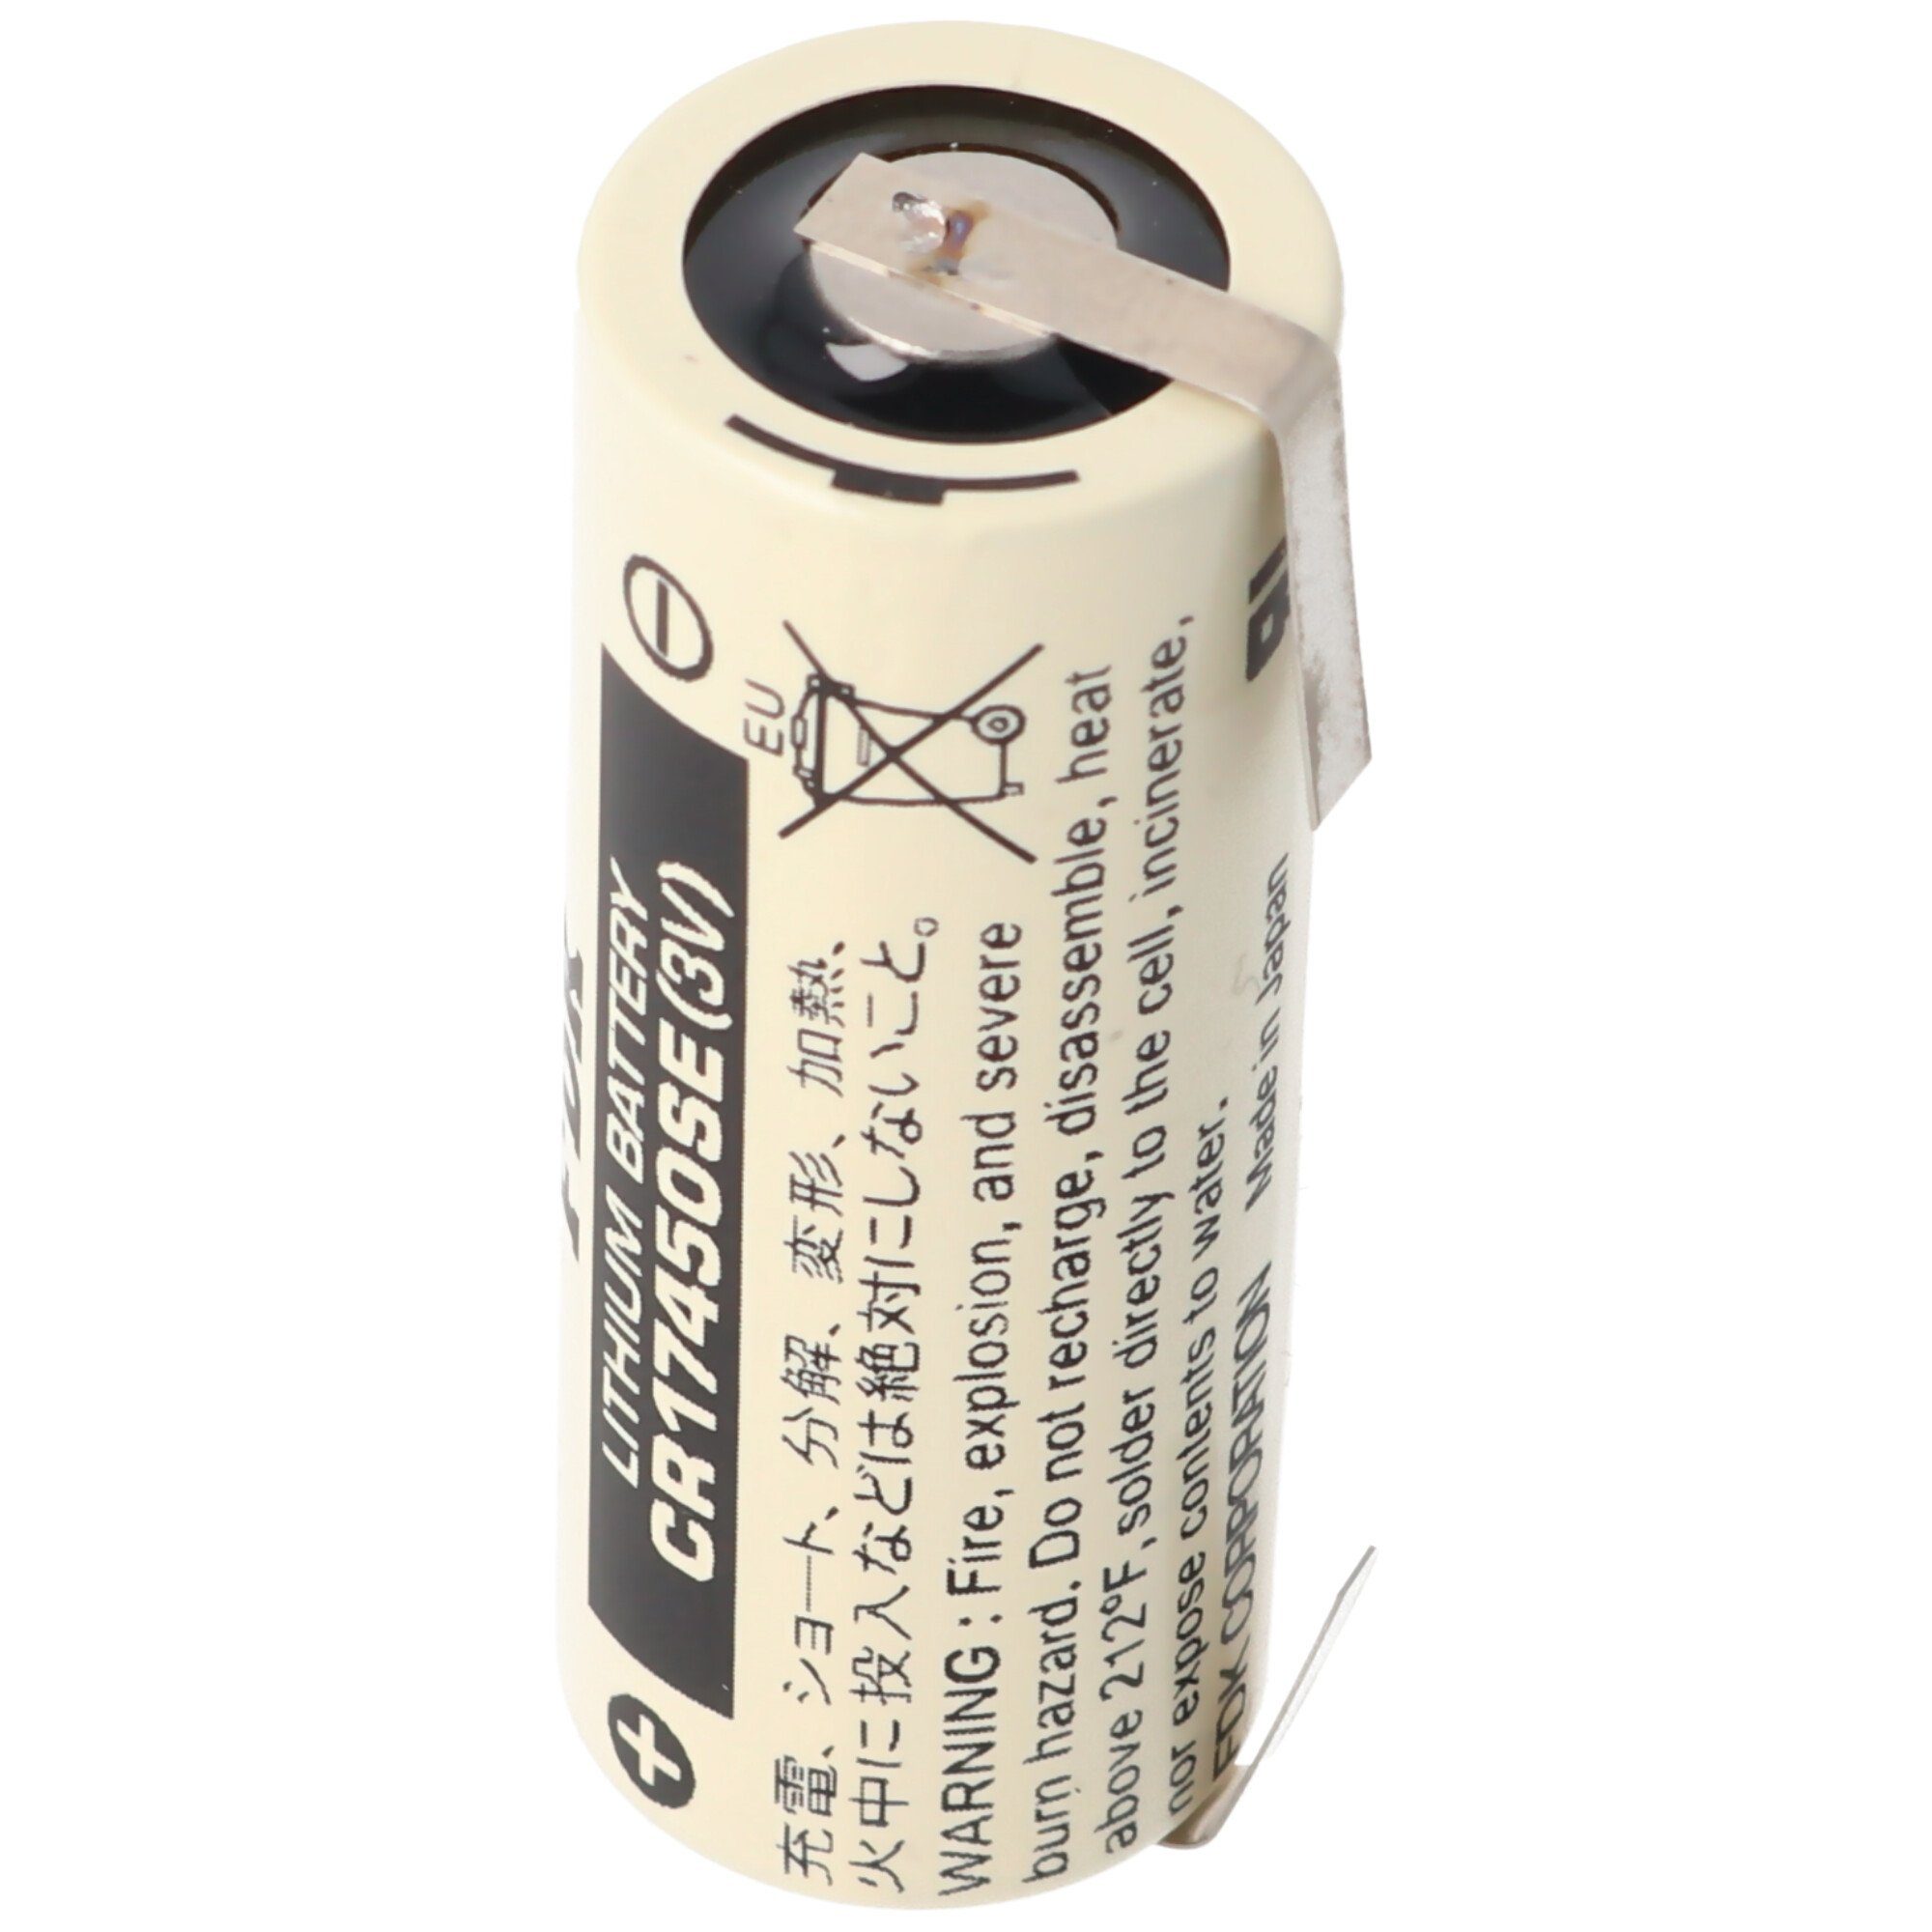 Sanyo FDK Sanyo Batterie (3,0 Lithium Batterie, V) Size Lötfahne mit U-Form CR17450SE A